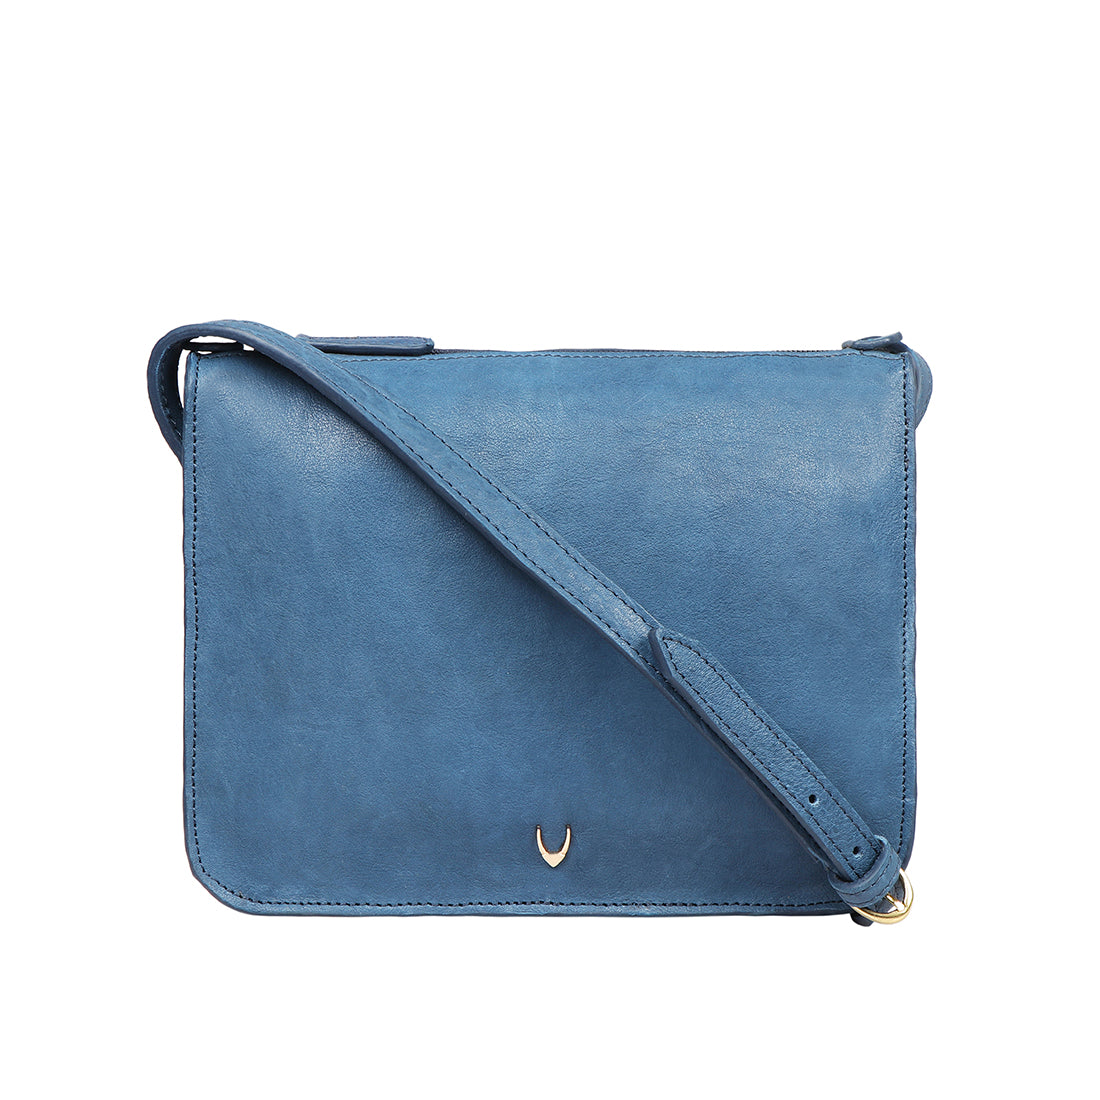 Buy HIDESIGN Women Blue Sling Bag Blue Online @ Best Price in